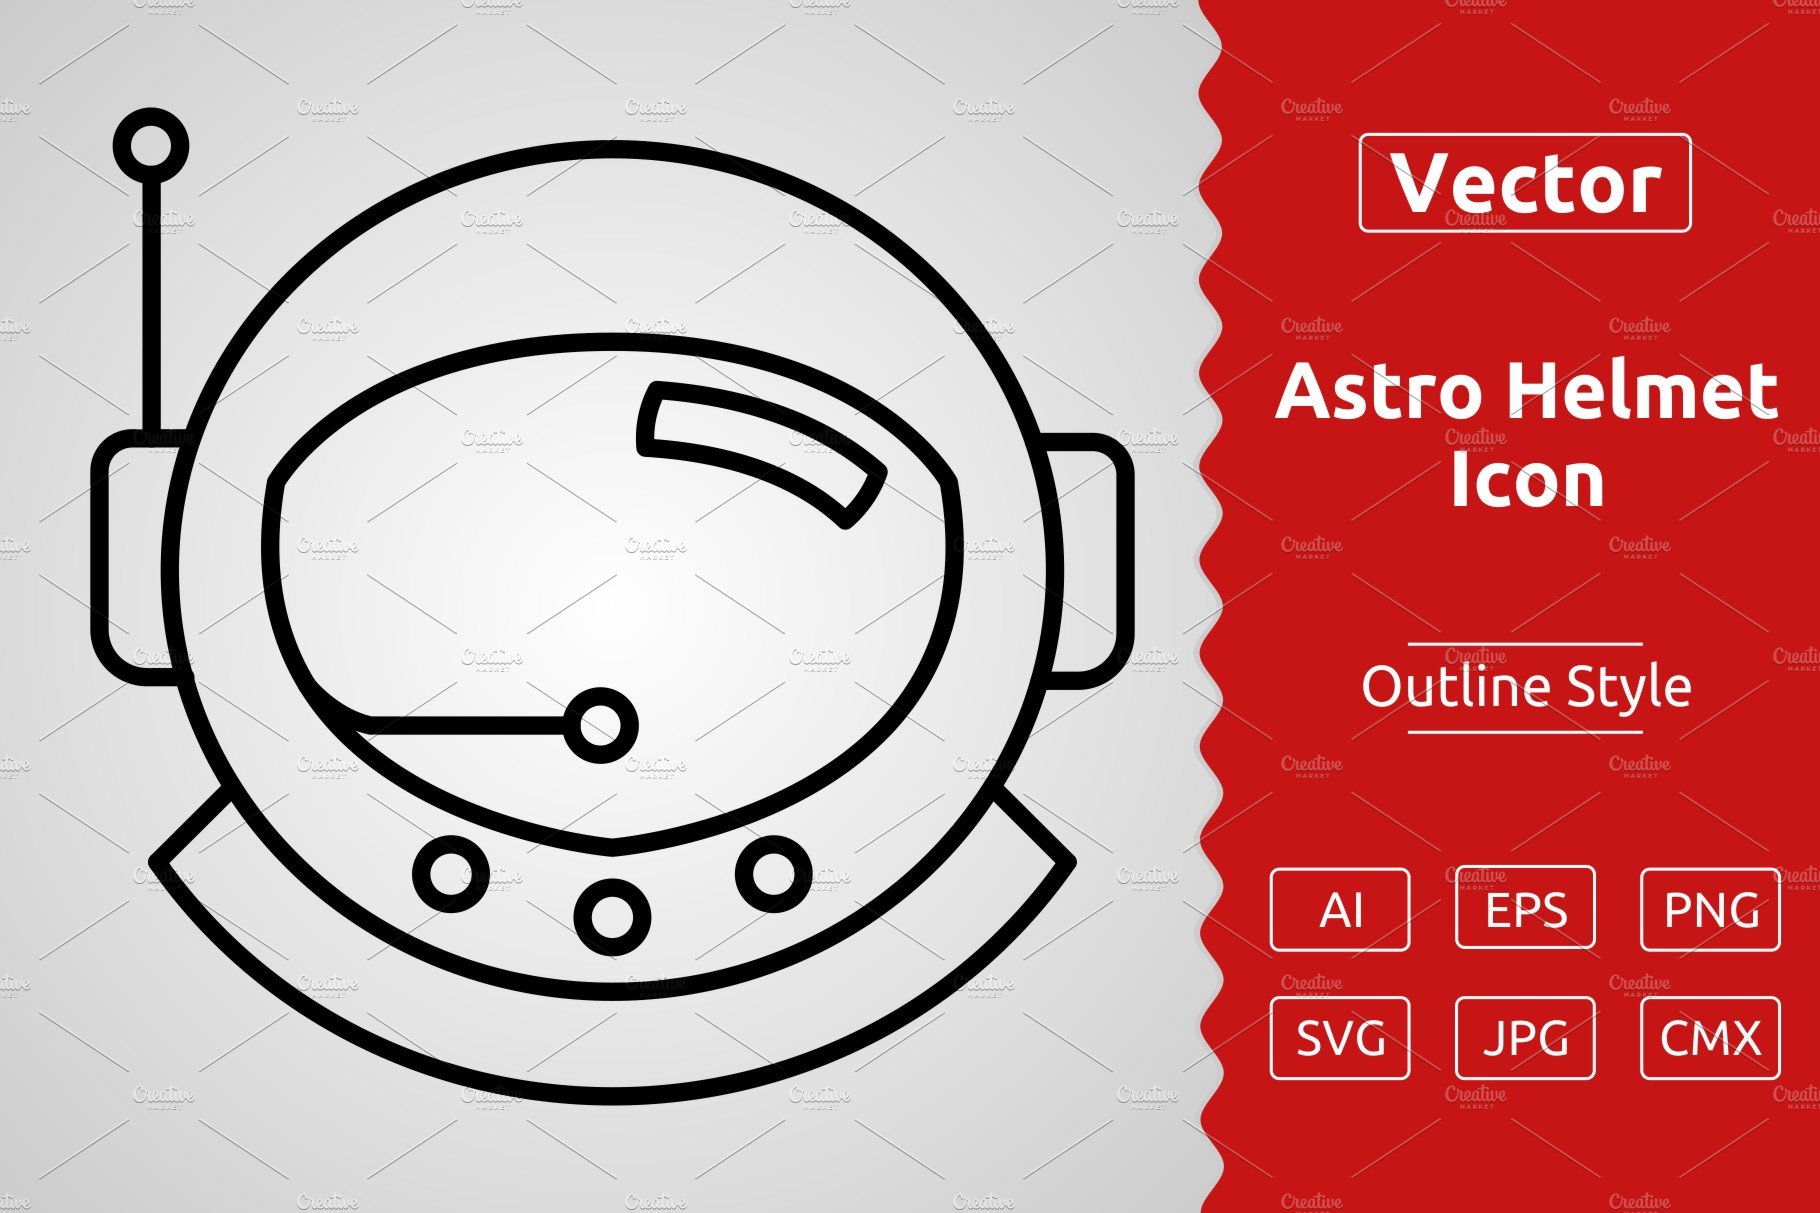 Vector Astronaut Helmet Outline Icon cover image.